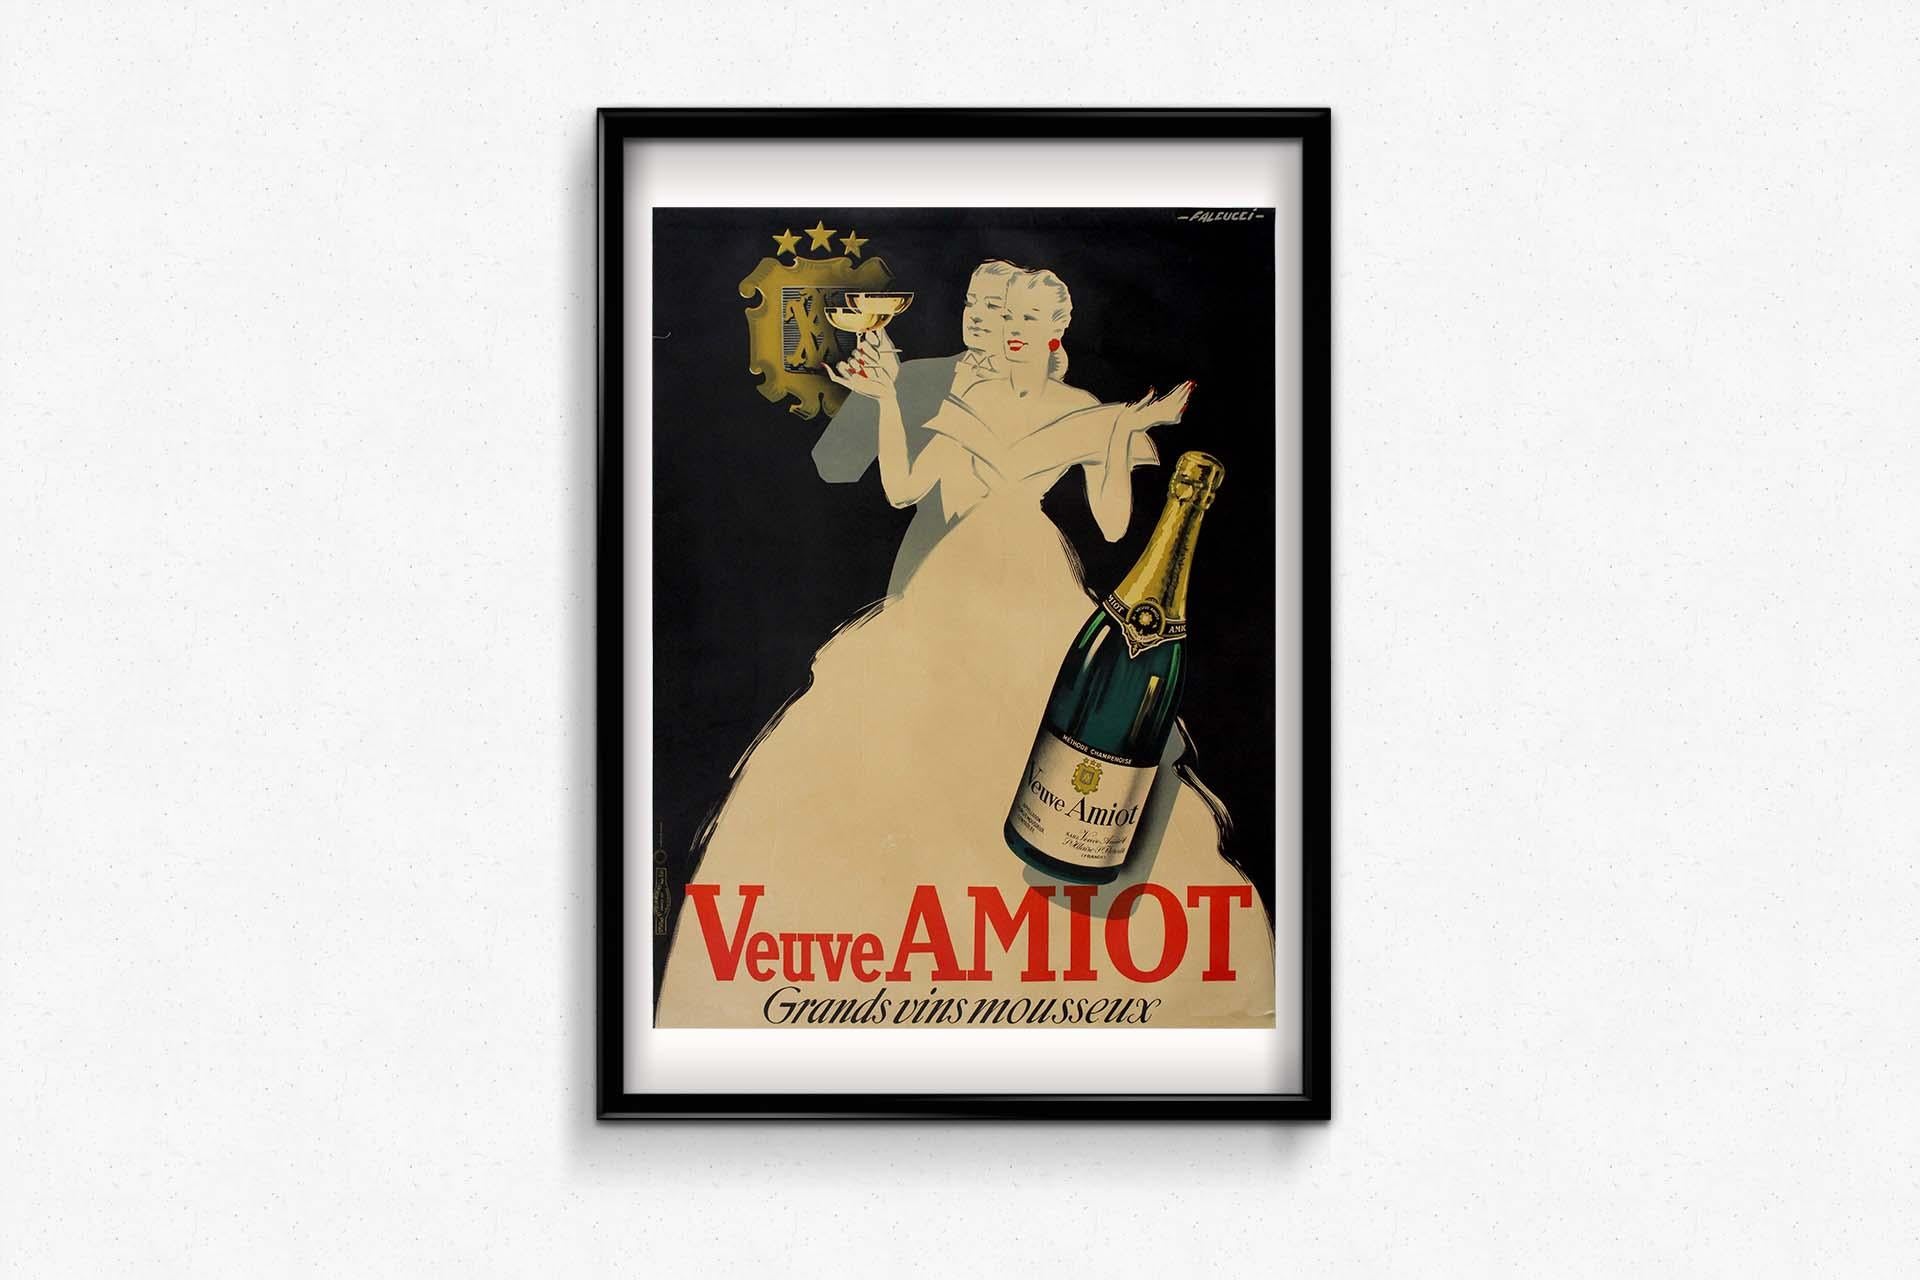 Falcucci's Original Werbeplakat Veuve Amiot Grands Vins Mousseux, 1929 (Art déco), Print, von Robert Falcucci